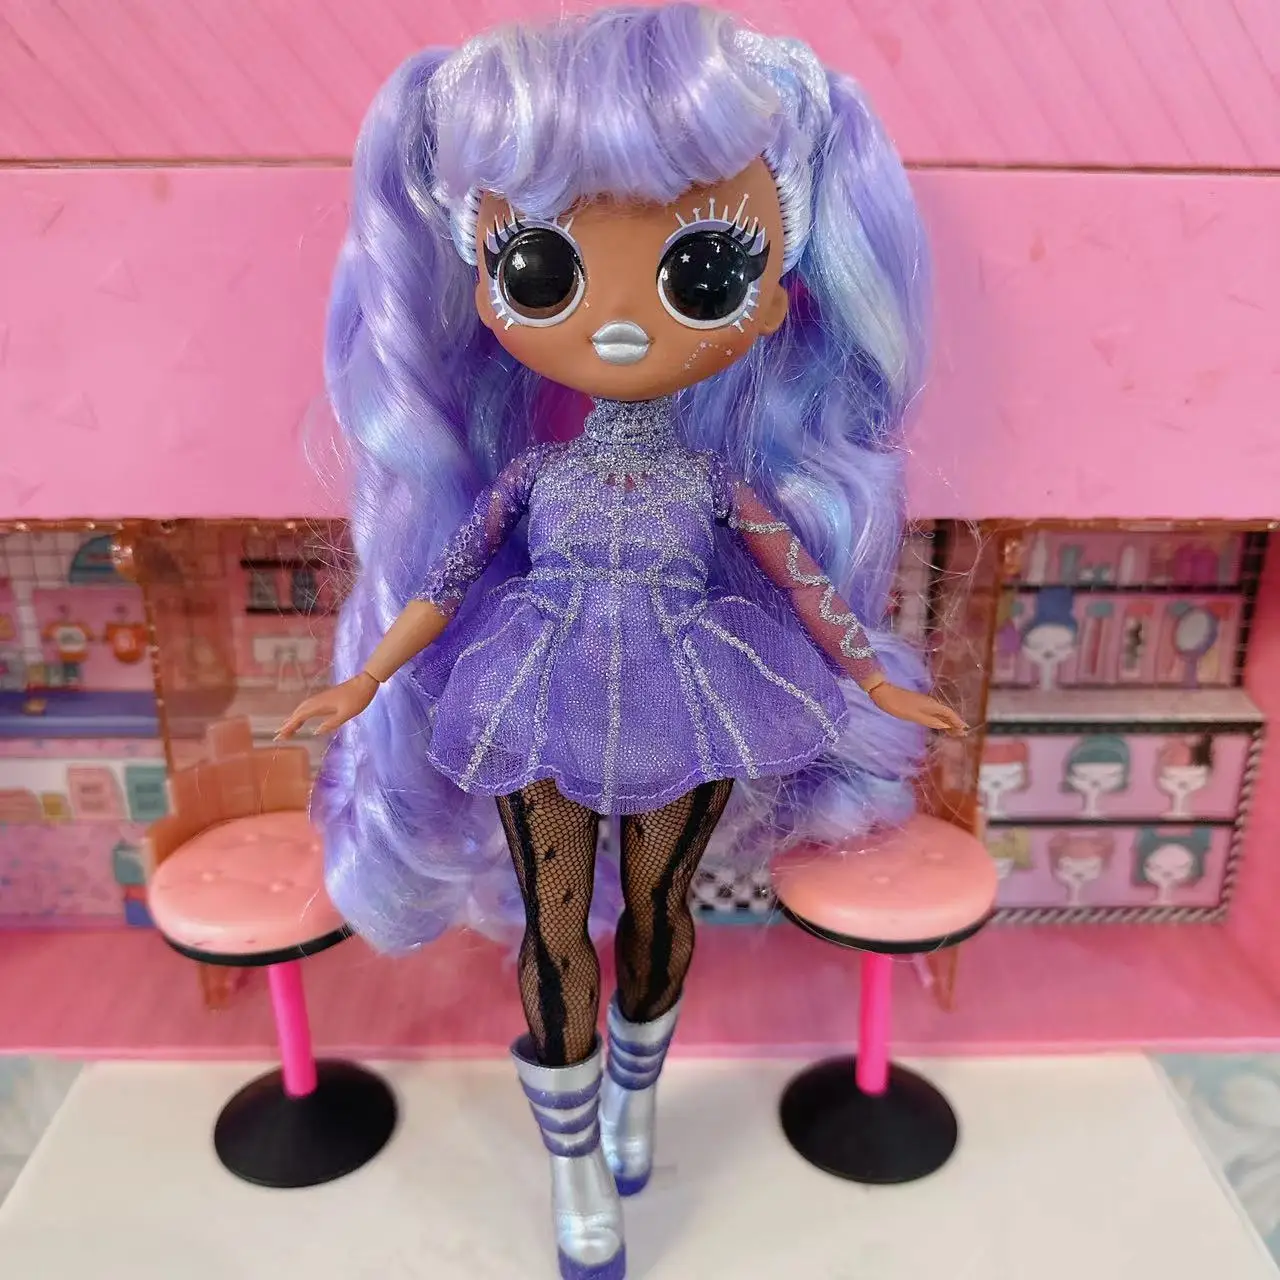 Genuine lol doll 28cm omg doll oversized sister girl play house